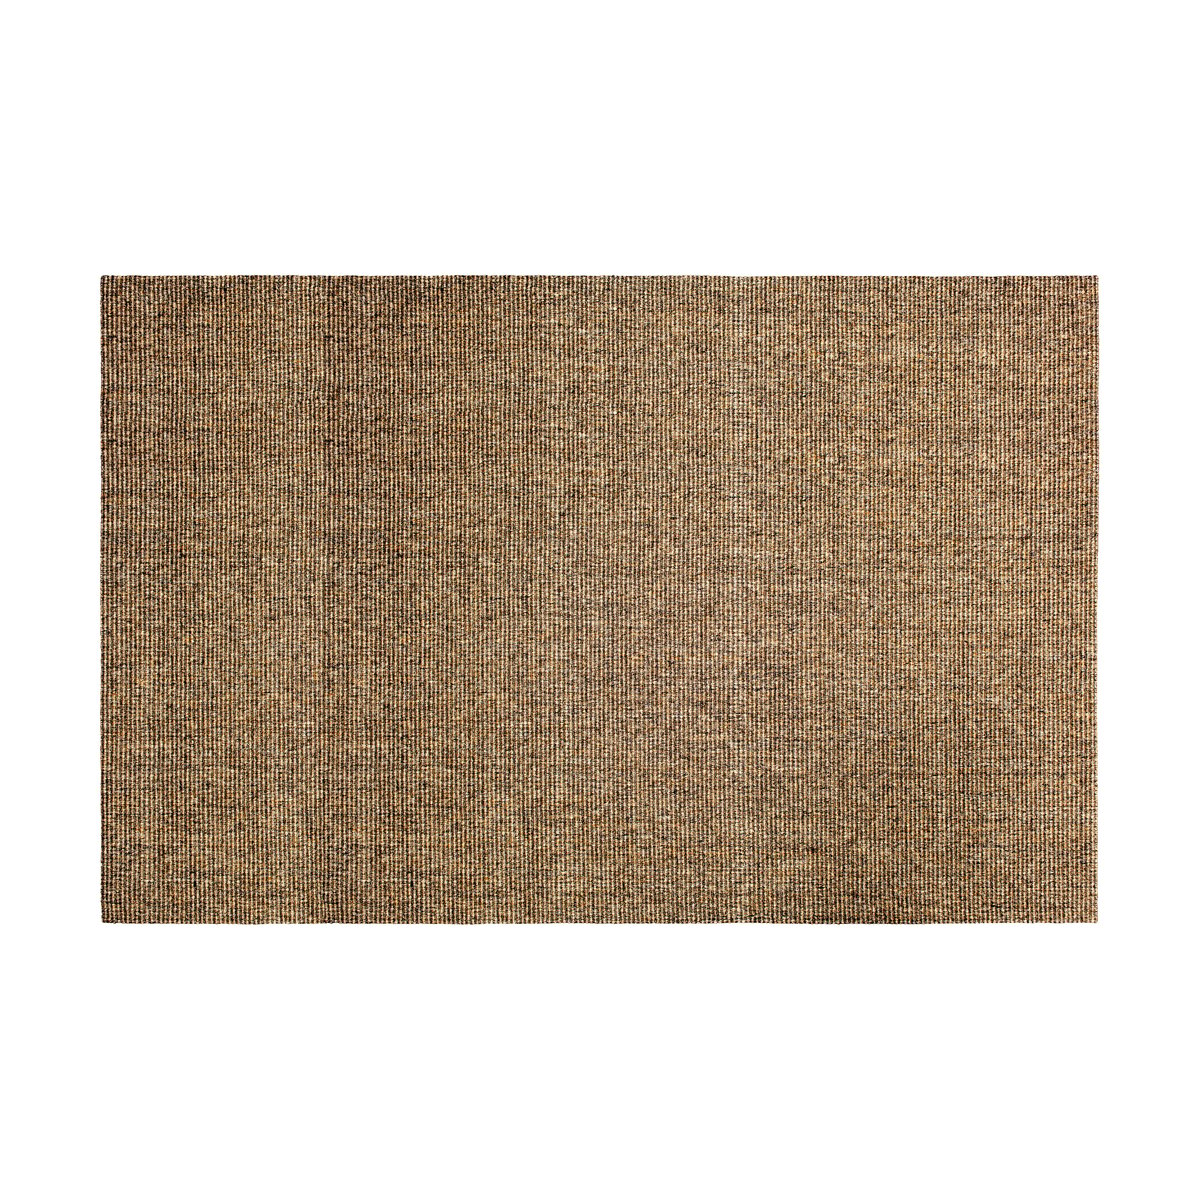 Dixie Astrid sisal tapijt Natural, 190x290 cm